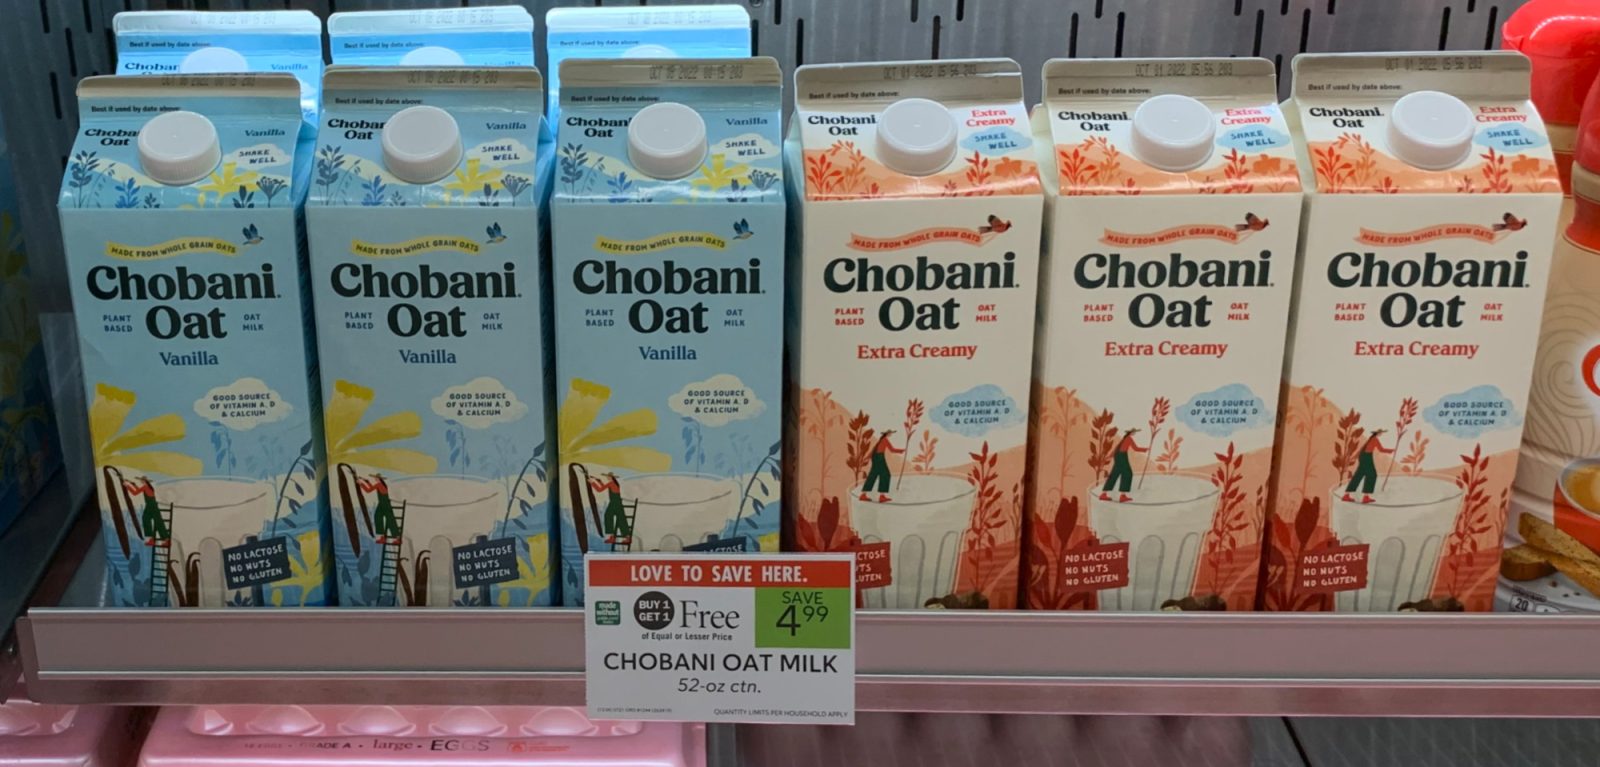 Chobani Oat Milk Just 1.25 At Publix iHeartPublix